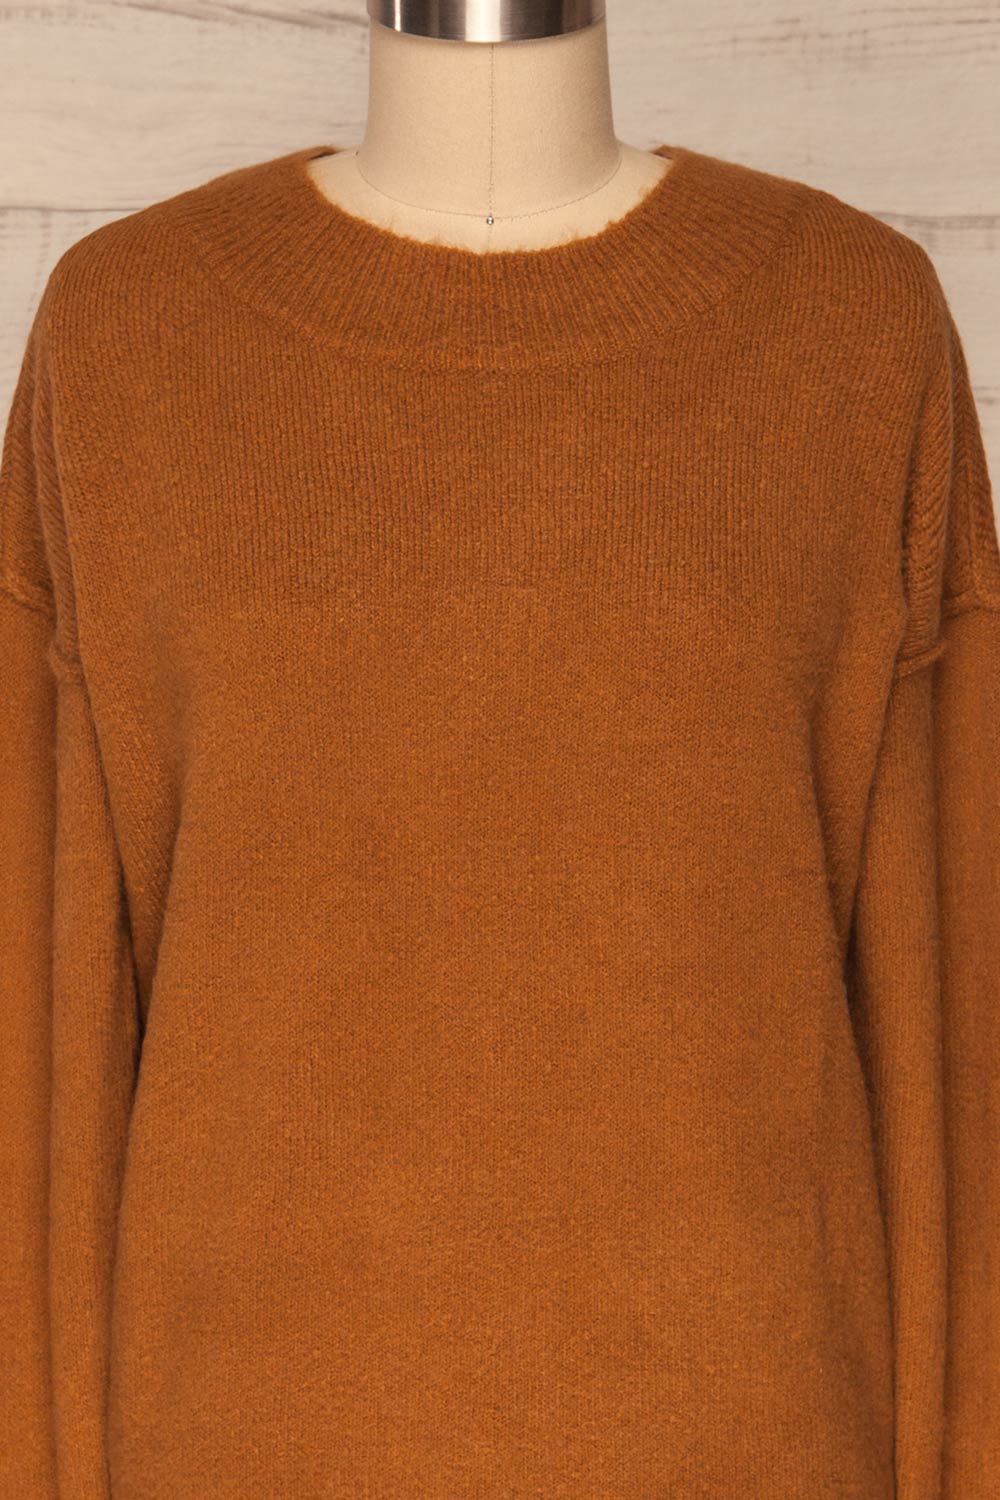 Gistel Brown Ochre Soft Knit Sweater | La Petite Garçonne front close-up